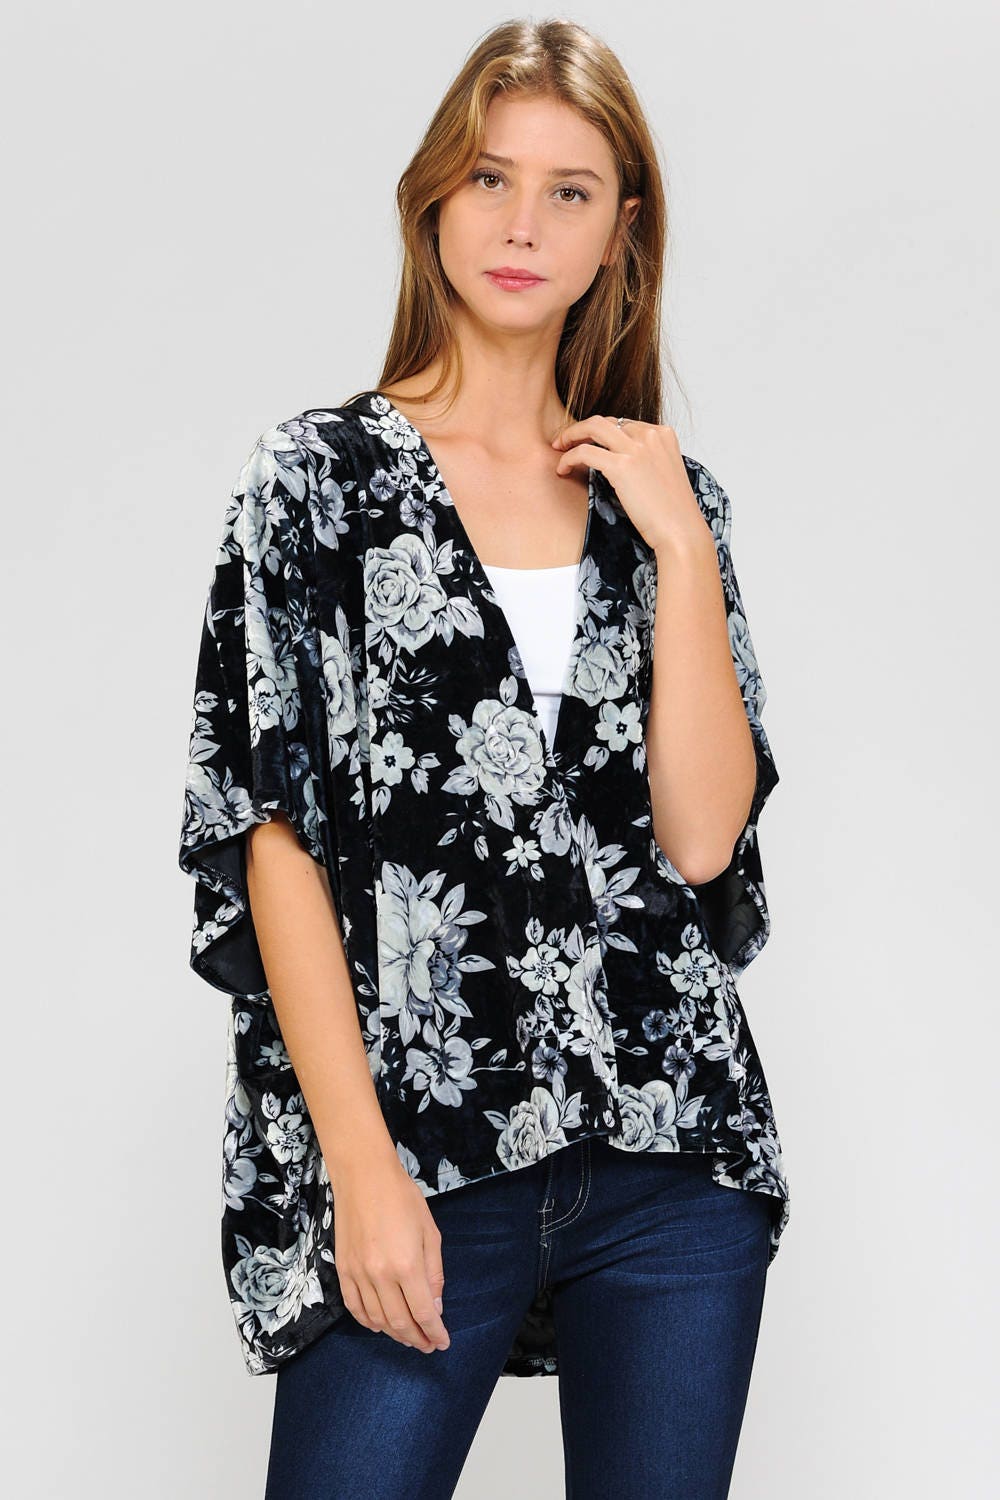 Black/ Floral Kimono Cardigan. Velvet Oriental Coat | Etsy